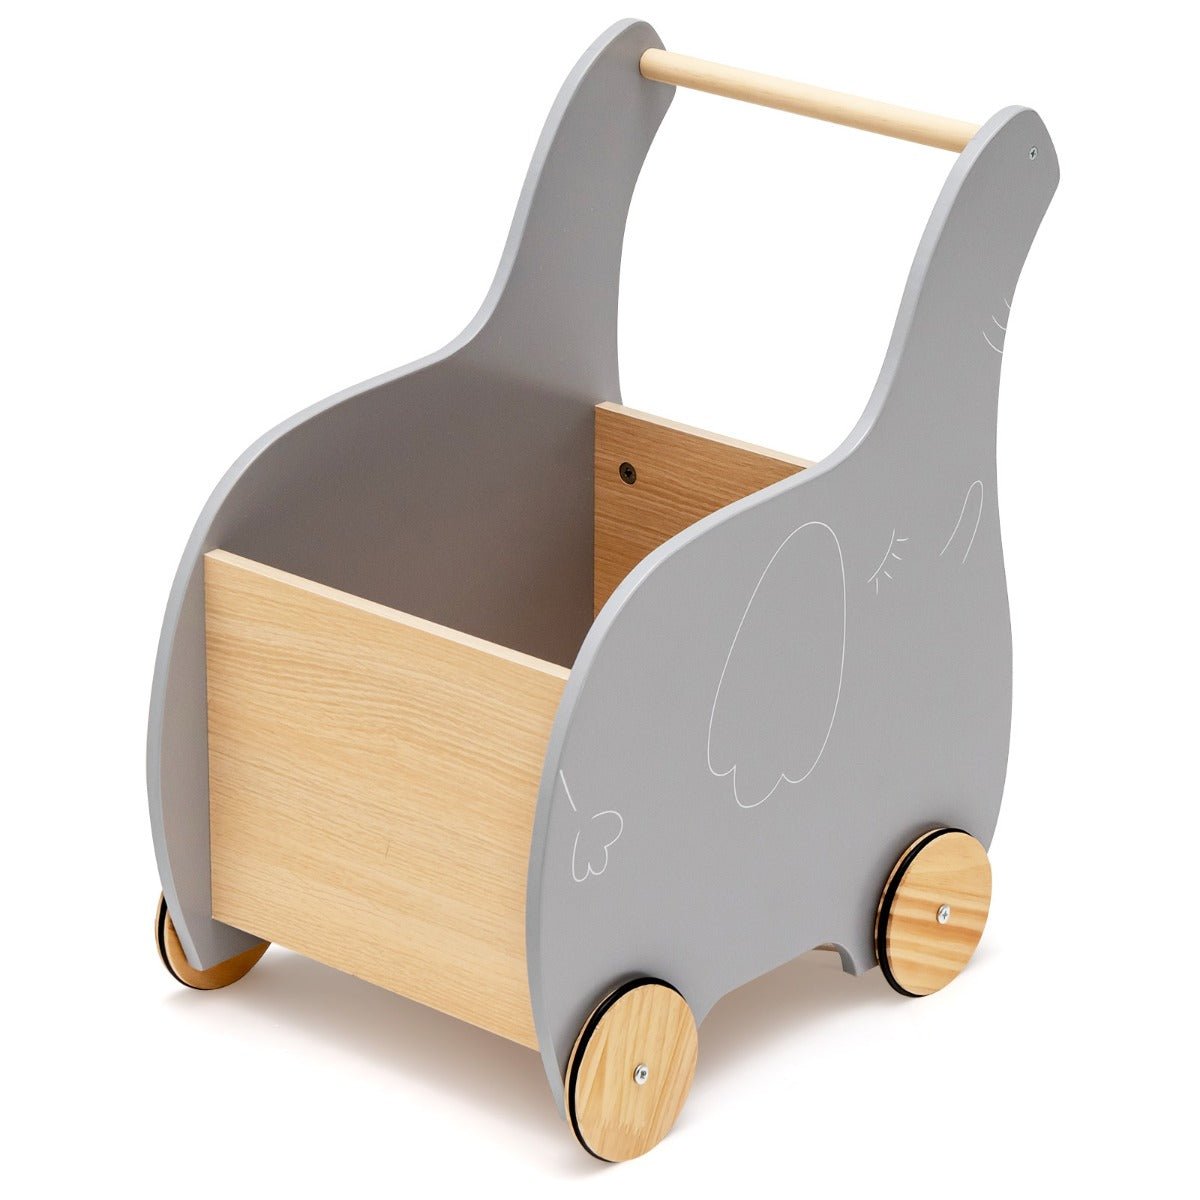 Children's Wooden Grocery Cart - Rubber Wheels, Fun Shopping Experience